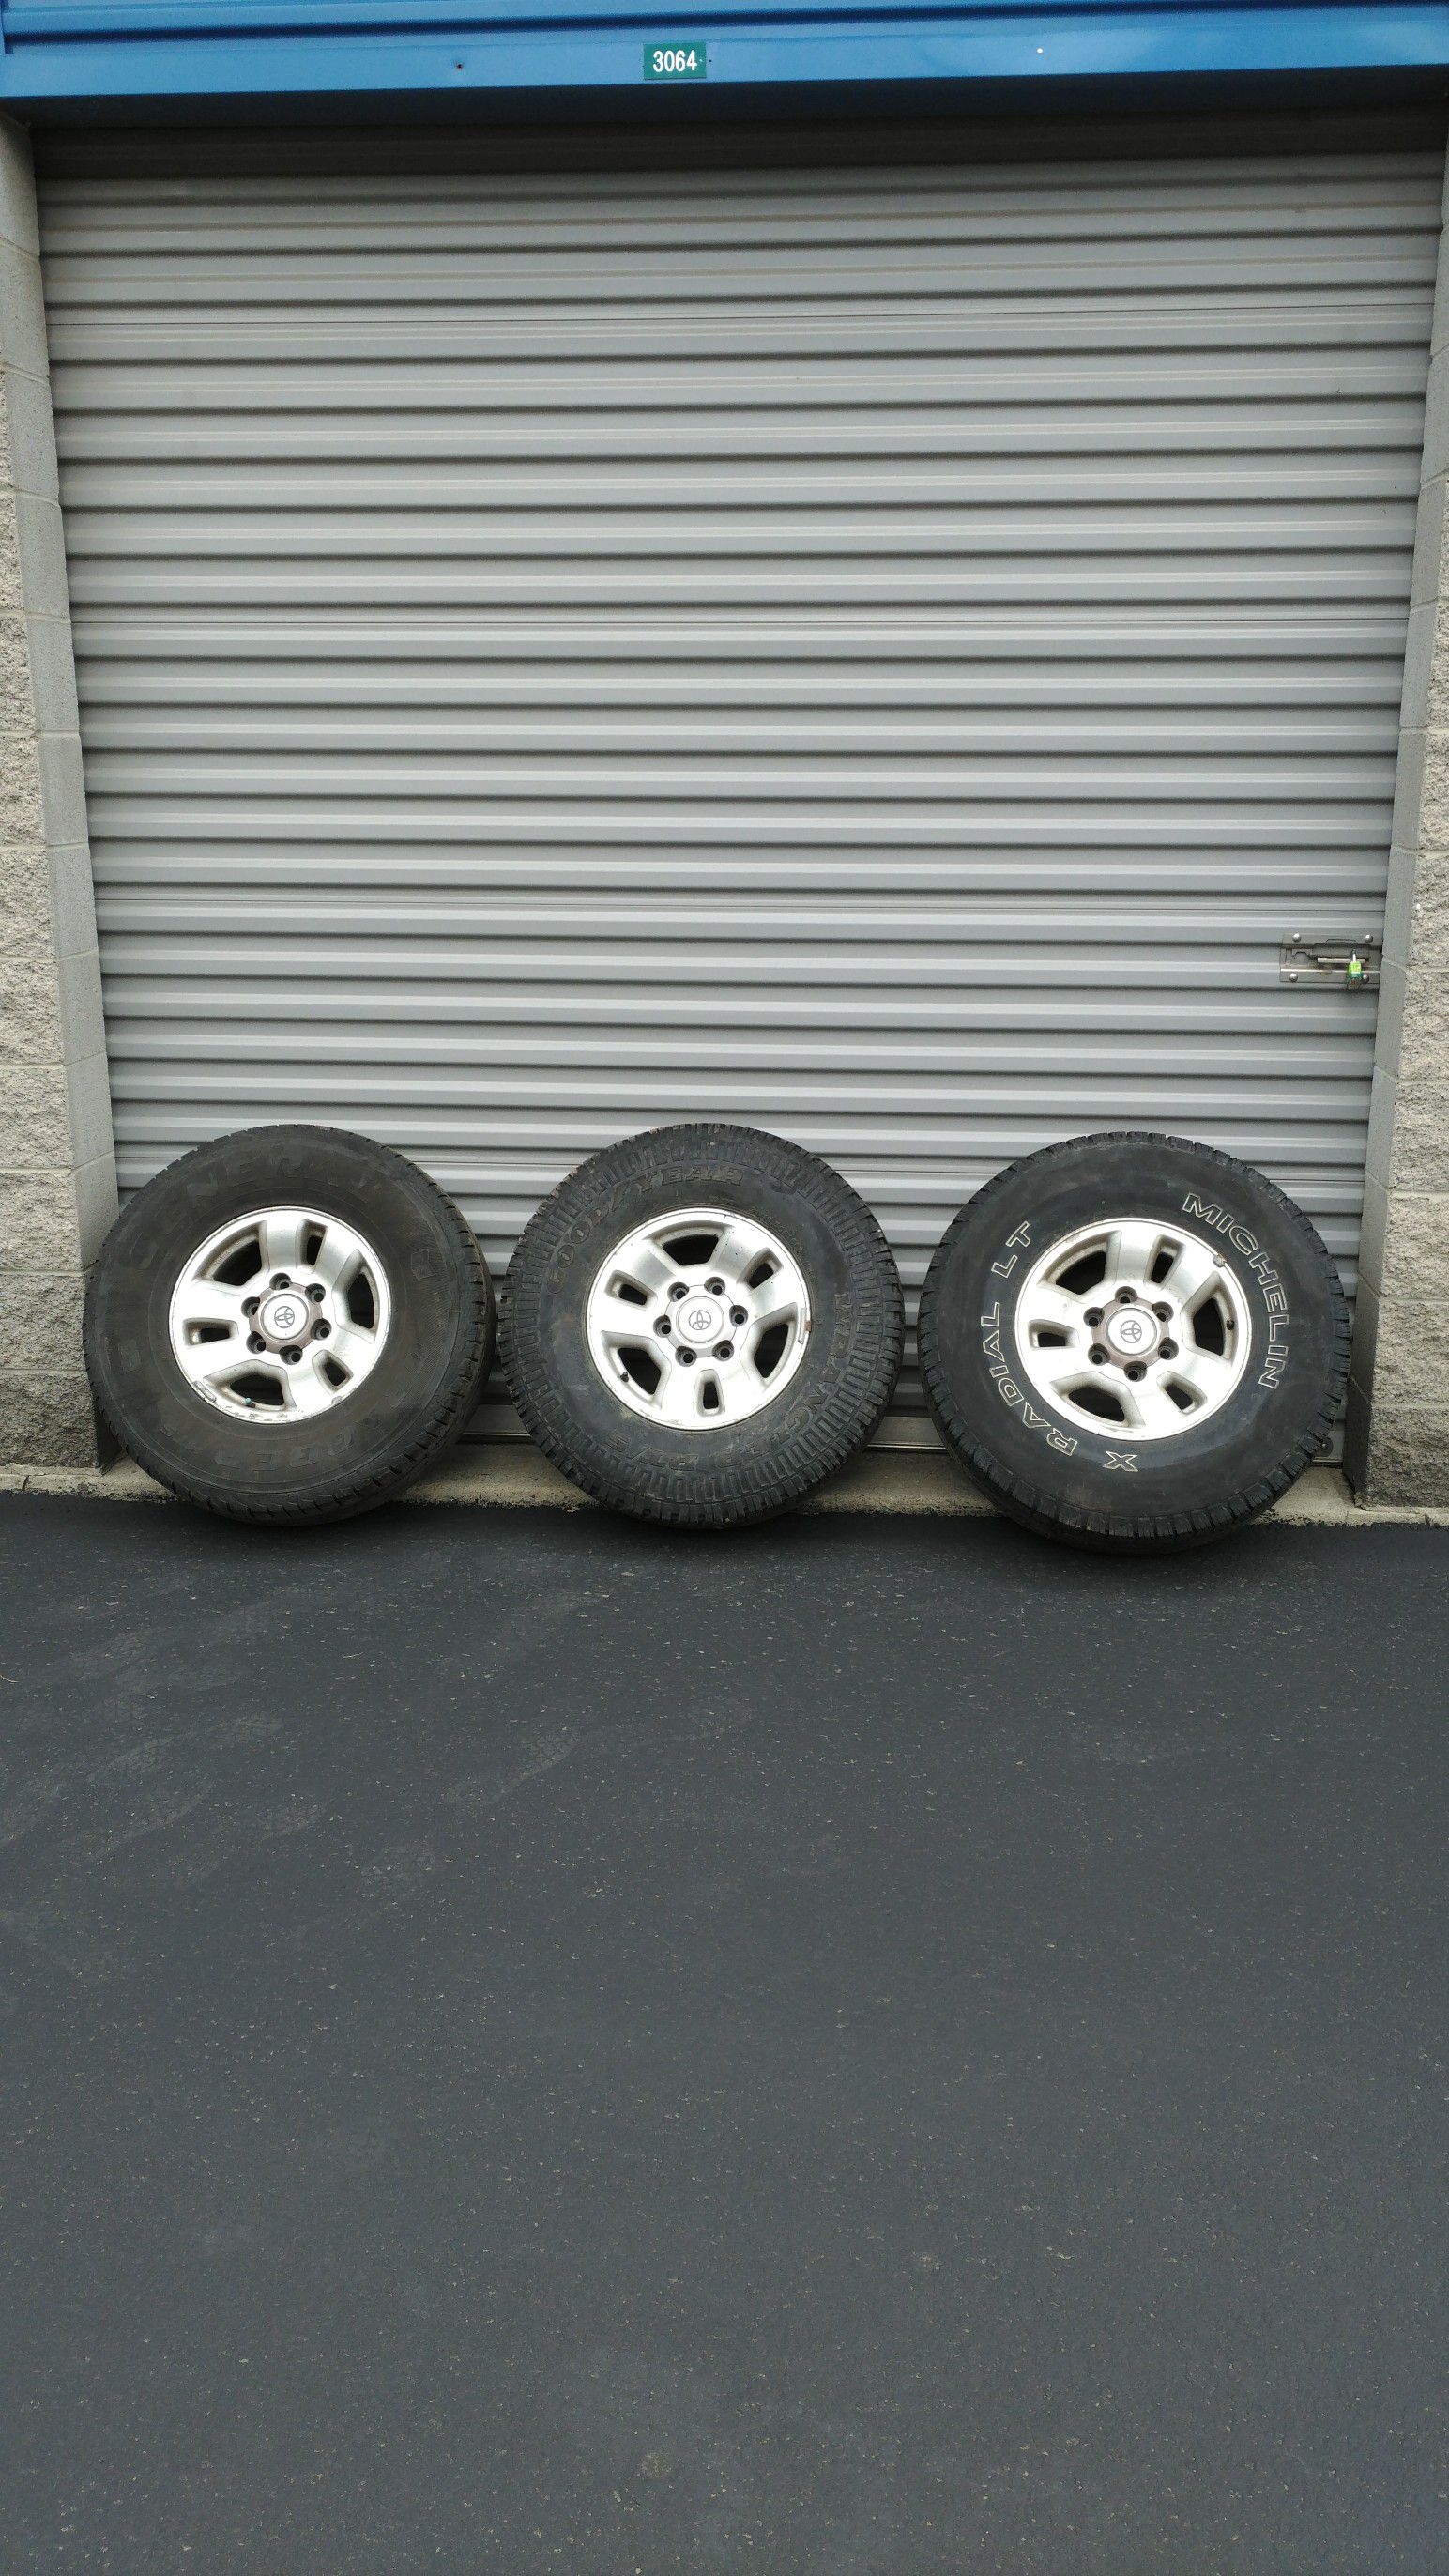 3 Toyota wheels